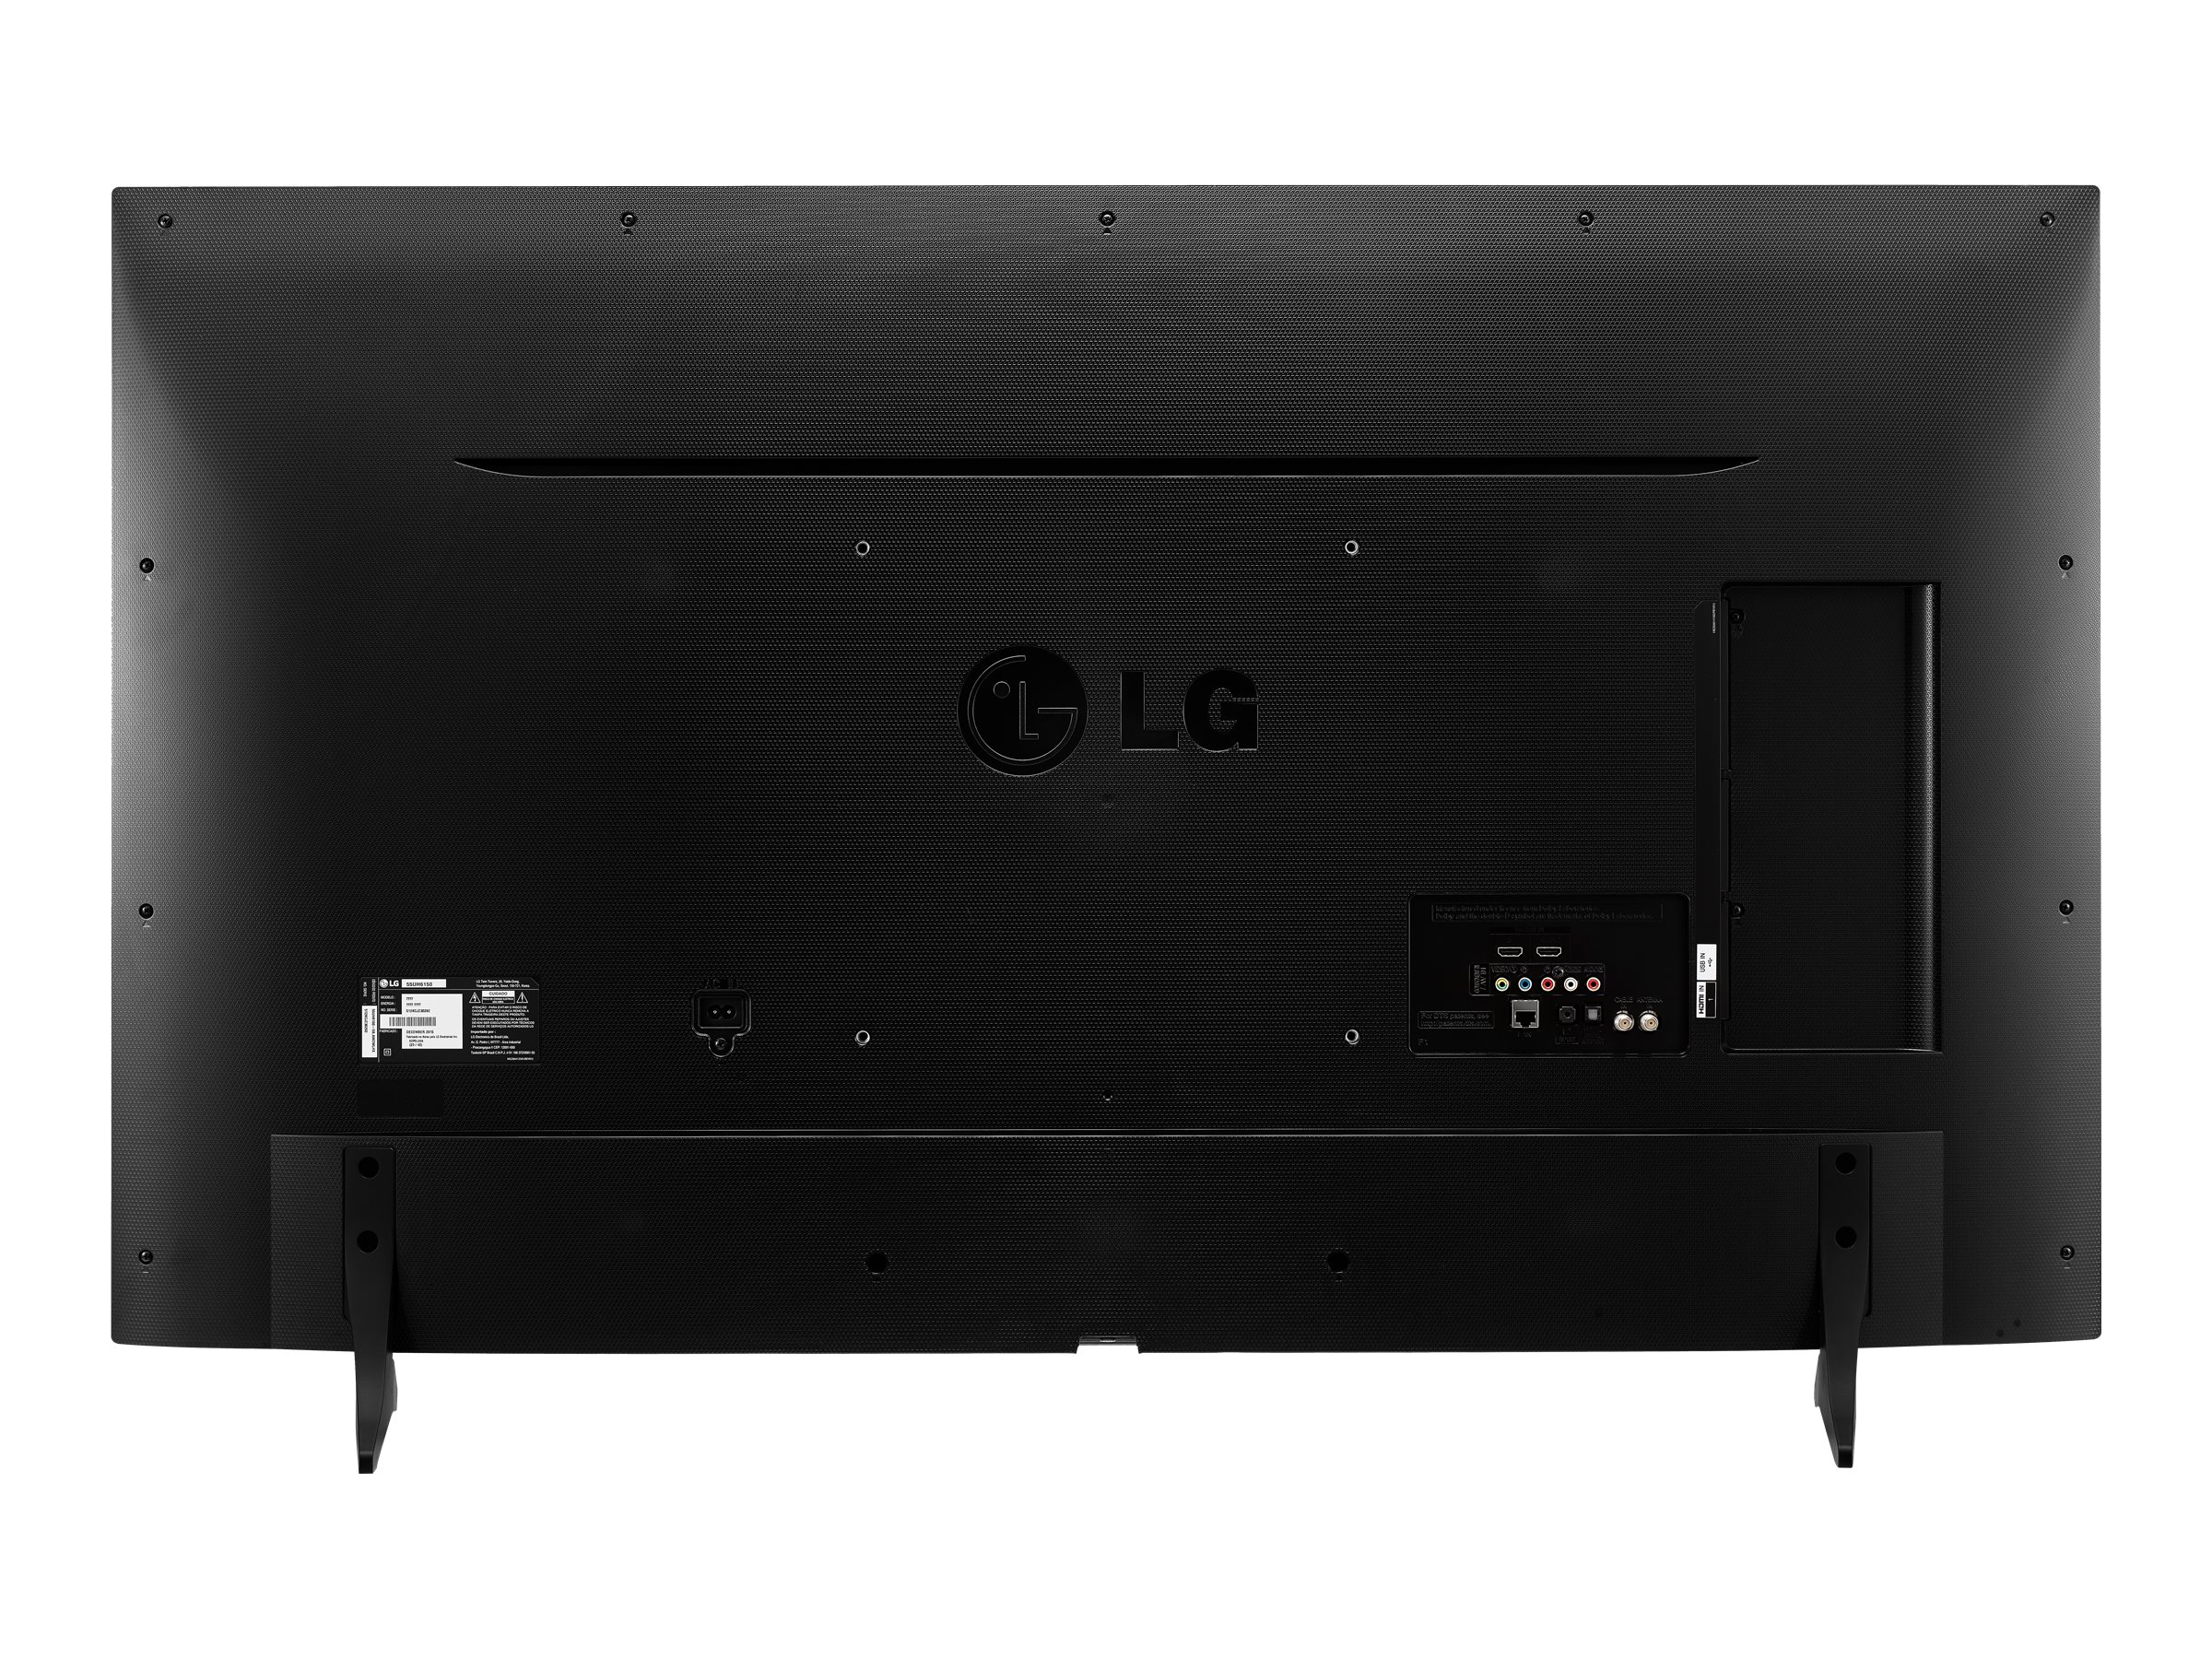 LG 55UH6030 - 55" Diagonal Class (54.6" viewable) LED-backlit LCD TV - Smart TV - webOS - 4K UHD (2160p) 3840 x 2160 - HDR - image 3 of 13